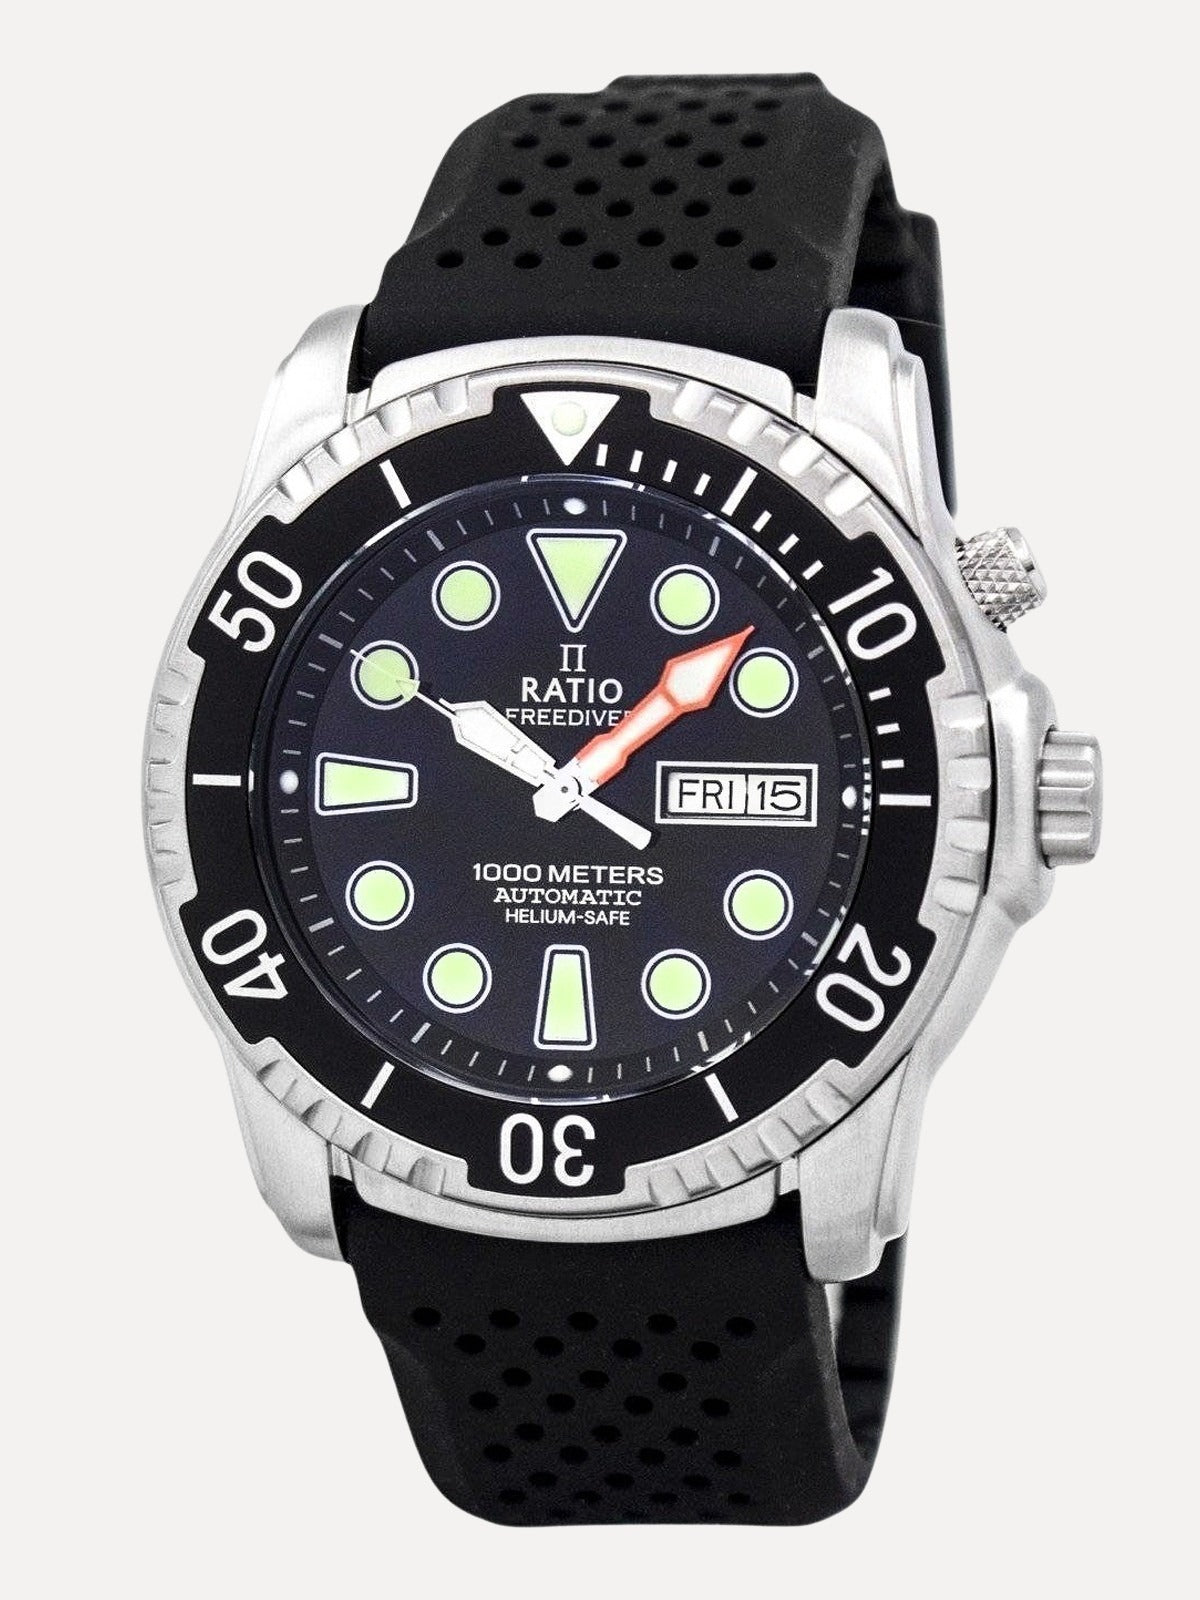 Ratio Free Diver Helium-Safe 1000M Automatic 1068HA90-34VA-00 Men's Watch